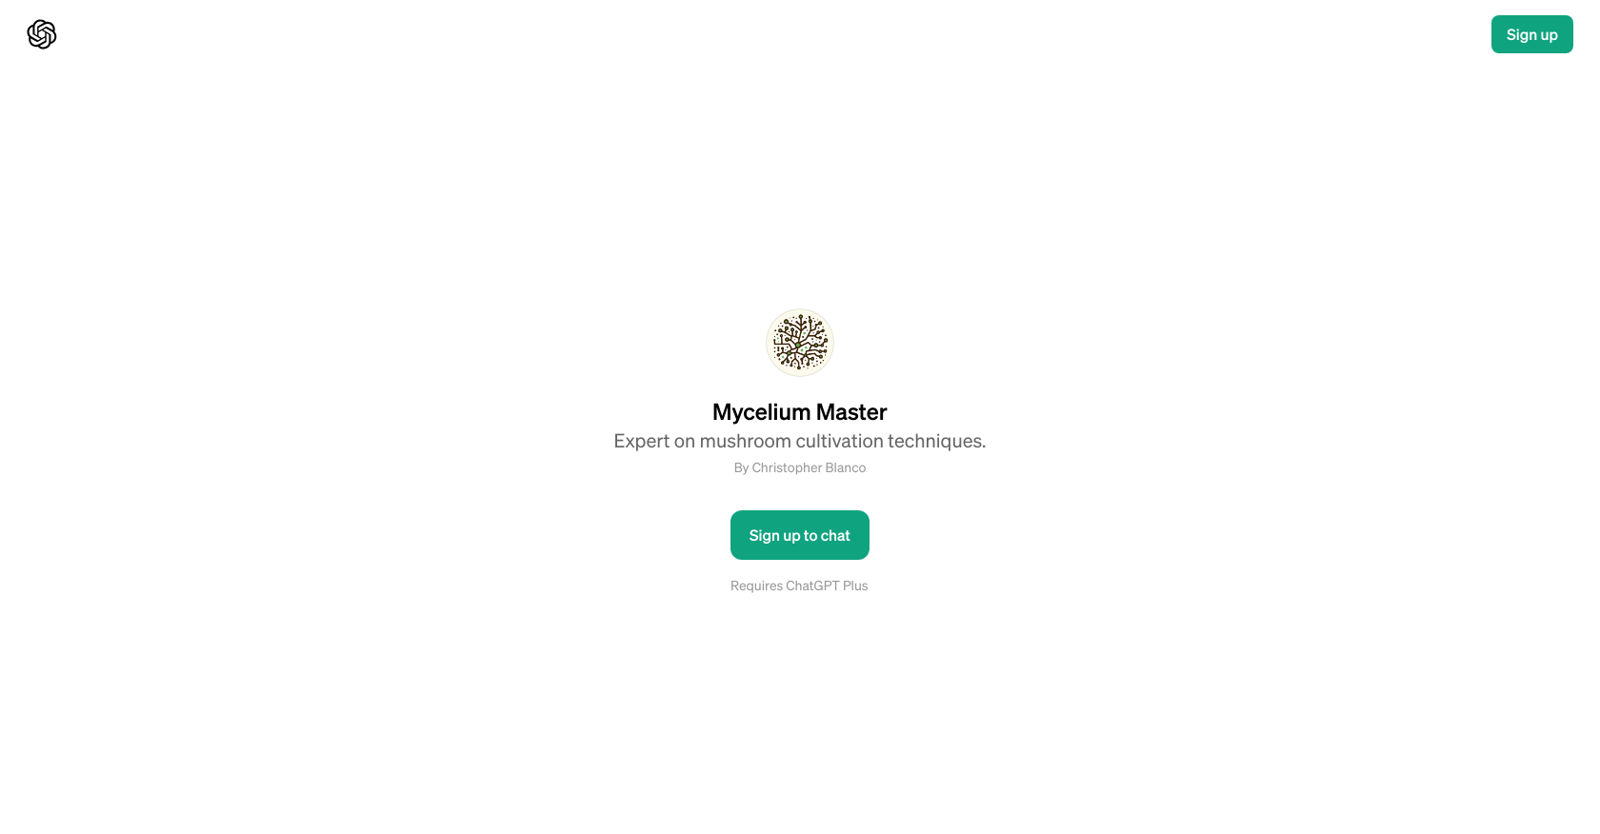 Mycelium Master website